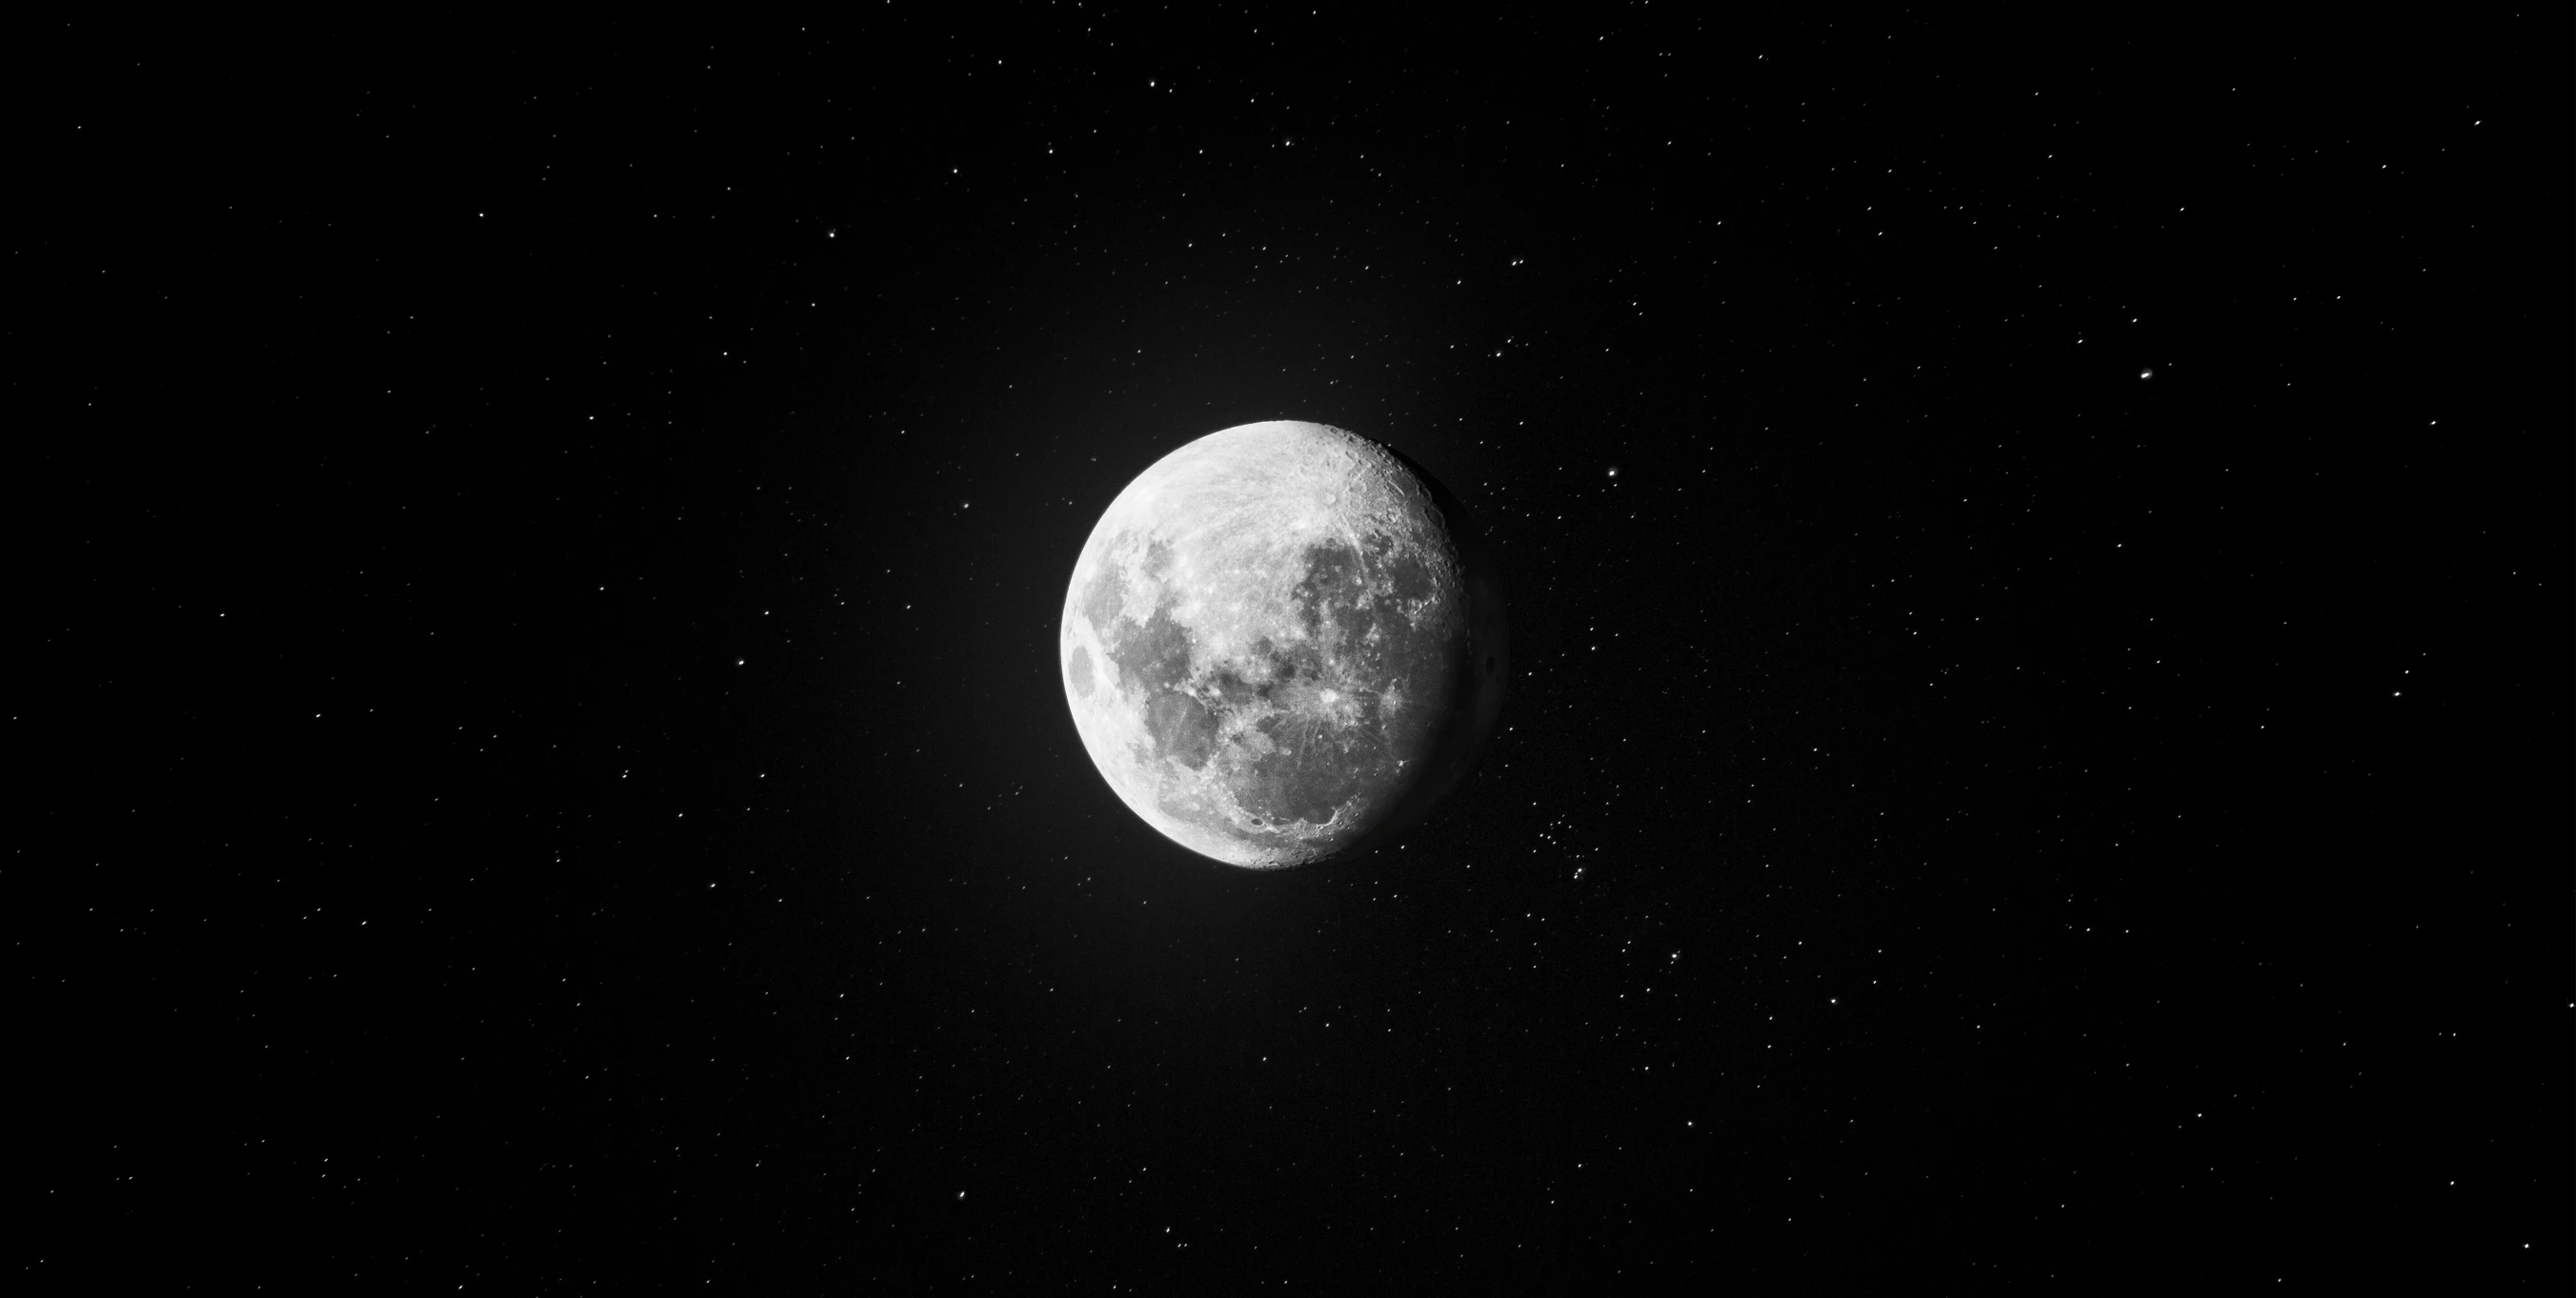 a moon seen through a black sky at night